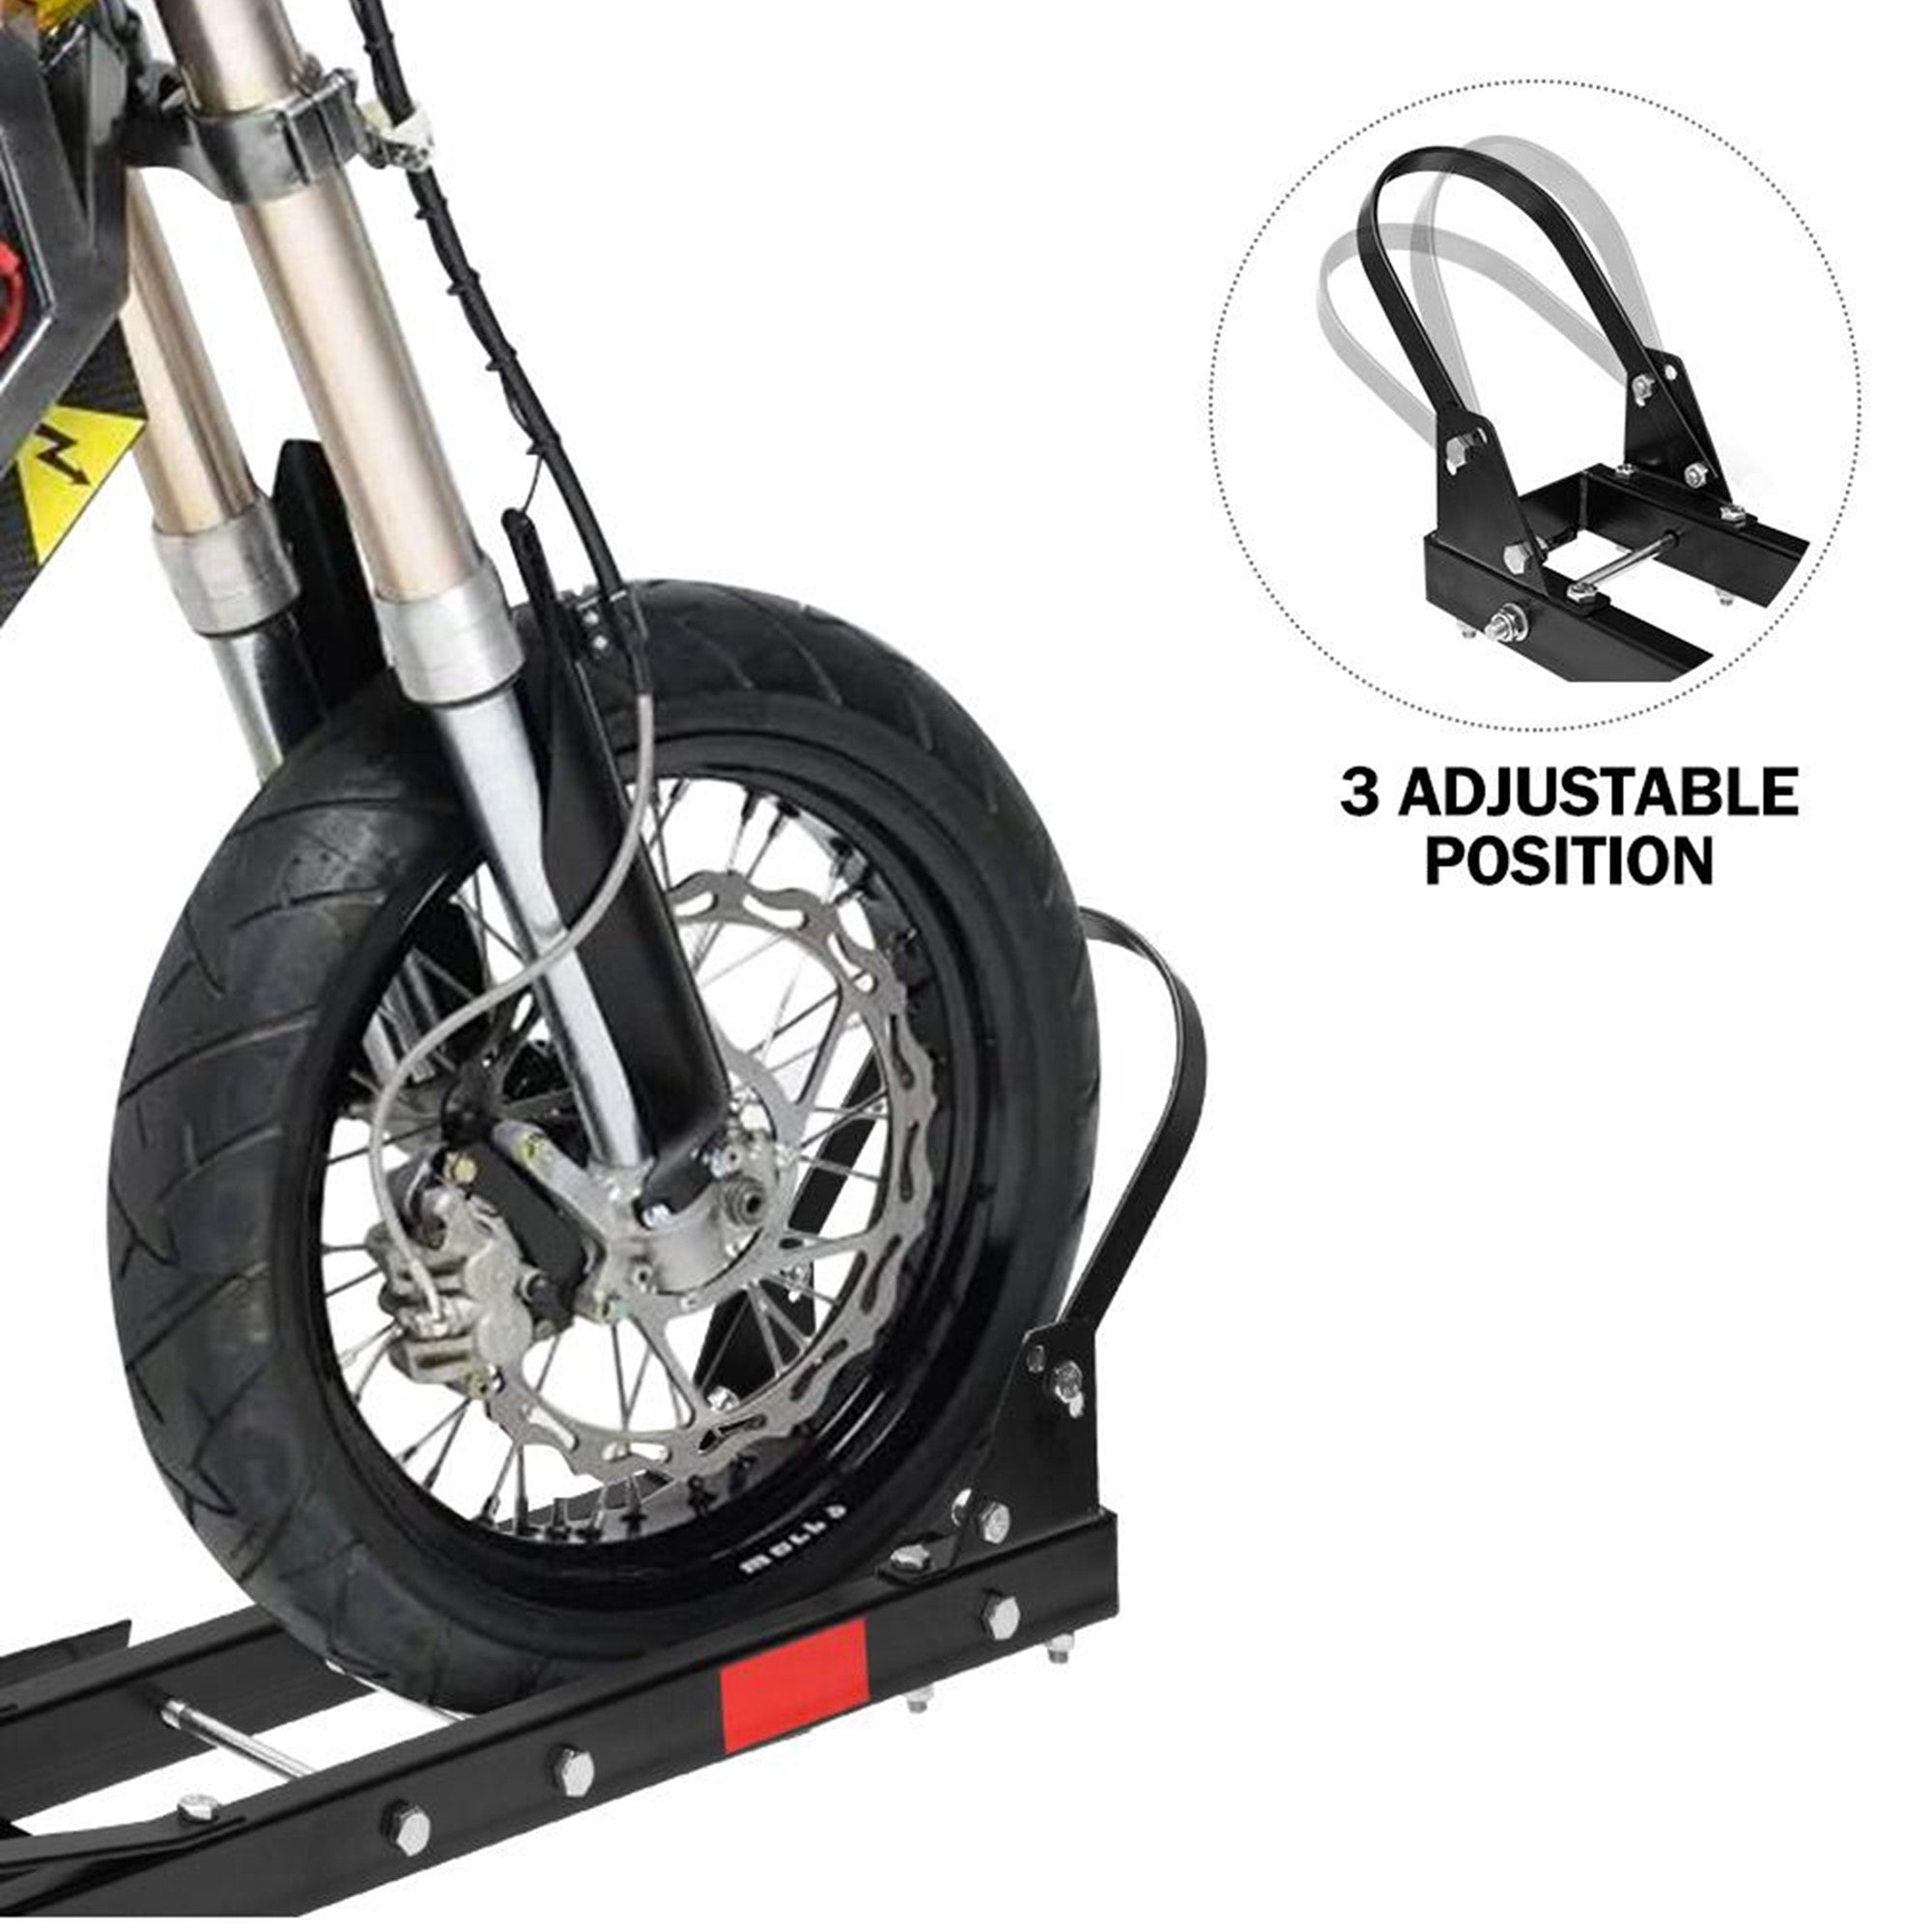 Adjustable wheel chock - stabilizing wheel